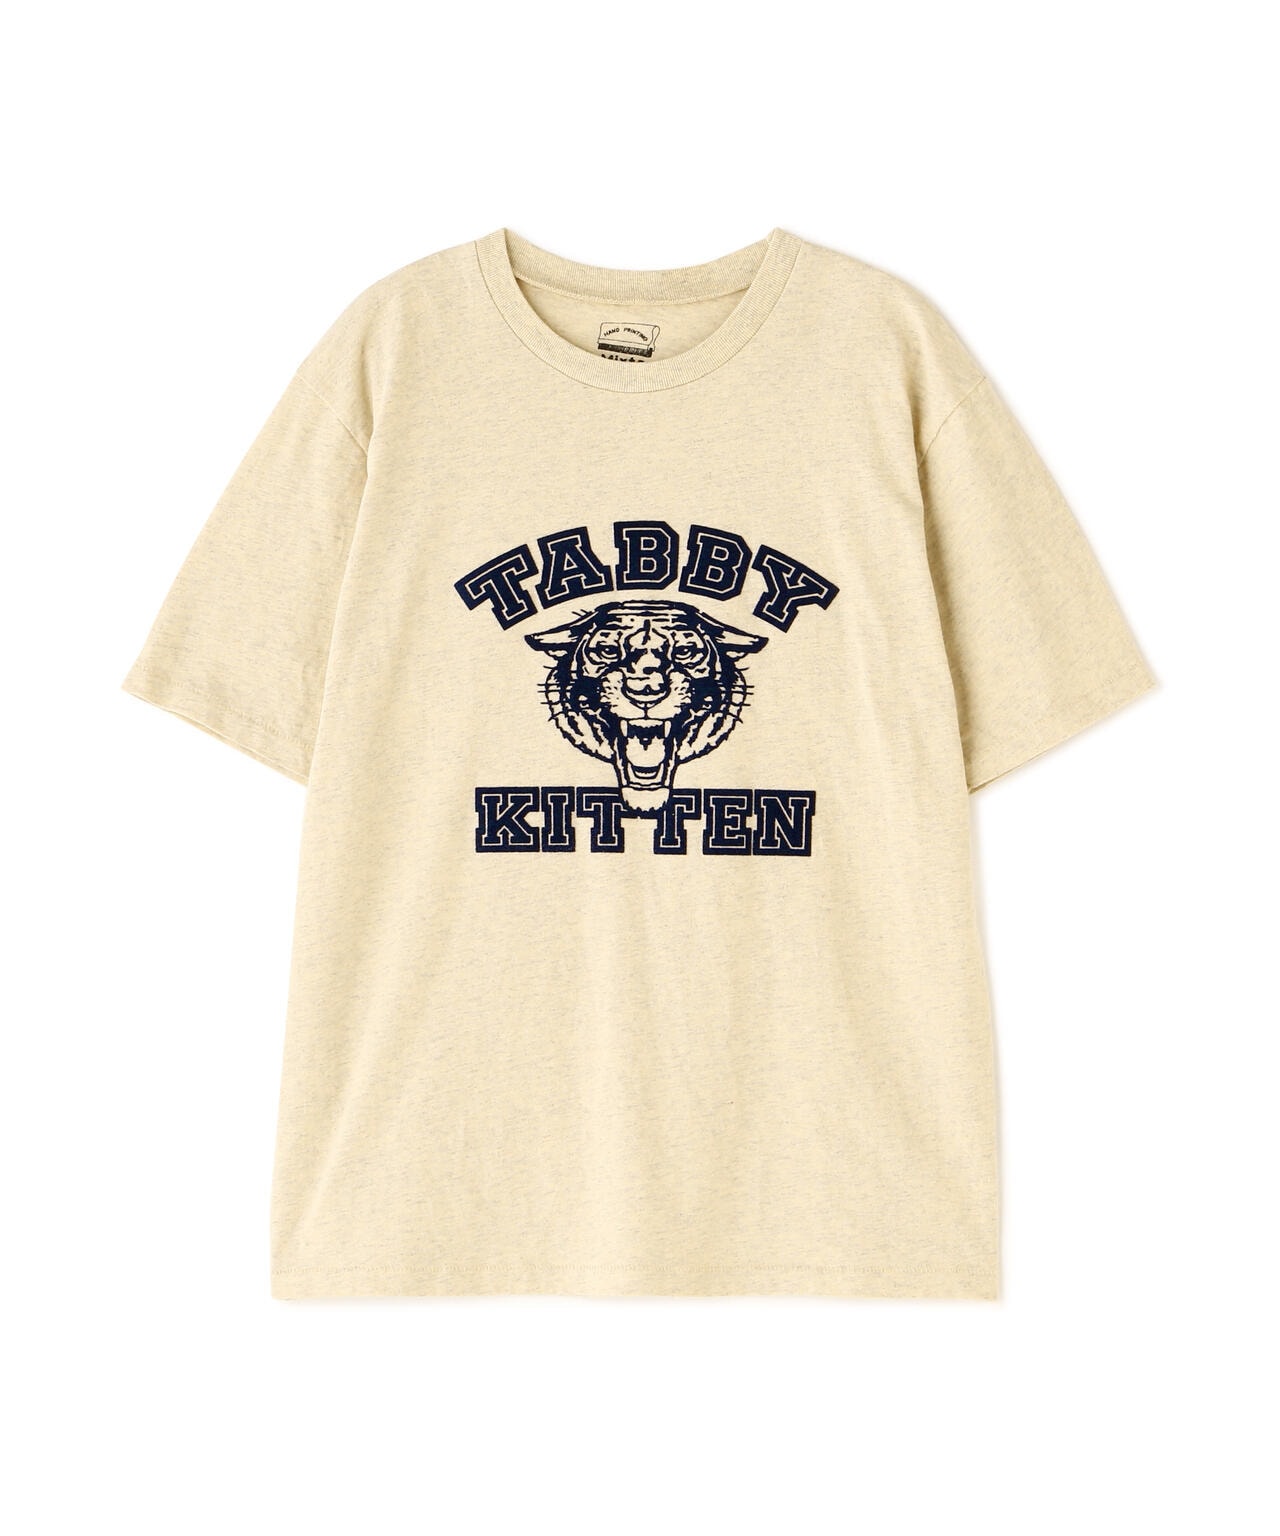 MIXTA/ミクスタ TABBY KITTEN Tシャツ | BEAVER ( ビーバー ) | US 